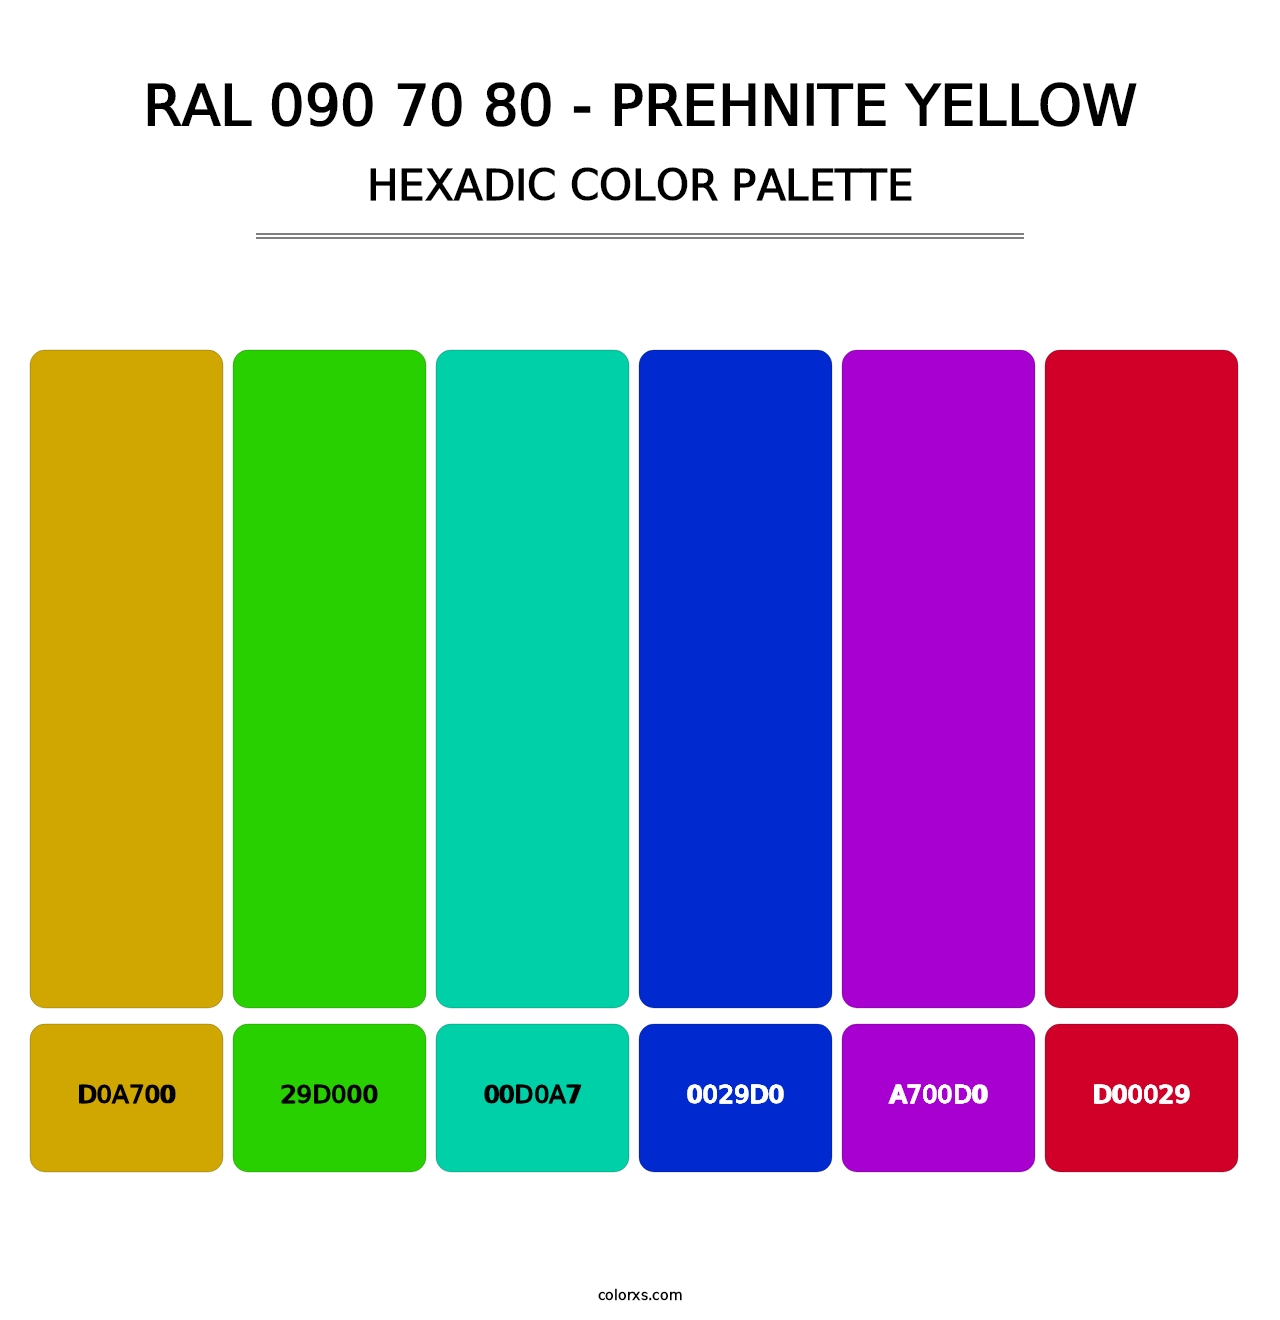 RAL 090 70 80 - Prehnite Yellow - Hexadic Color Palette